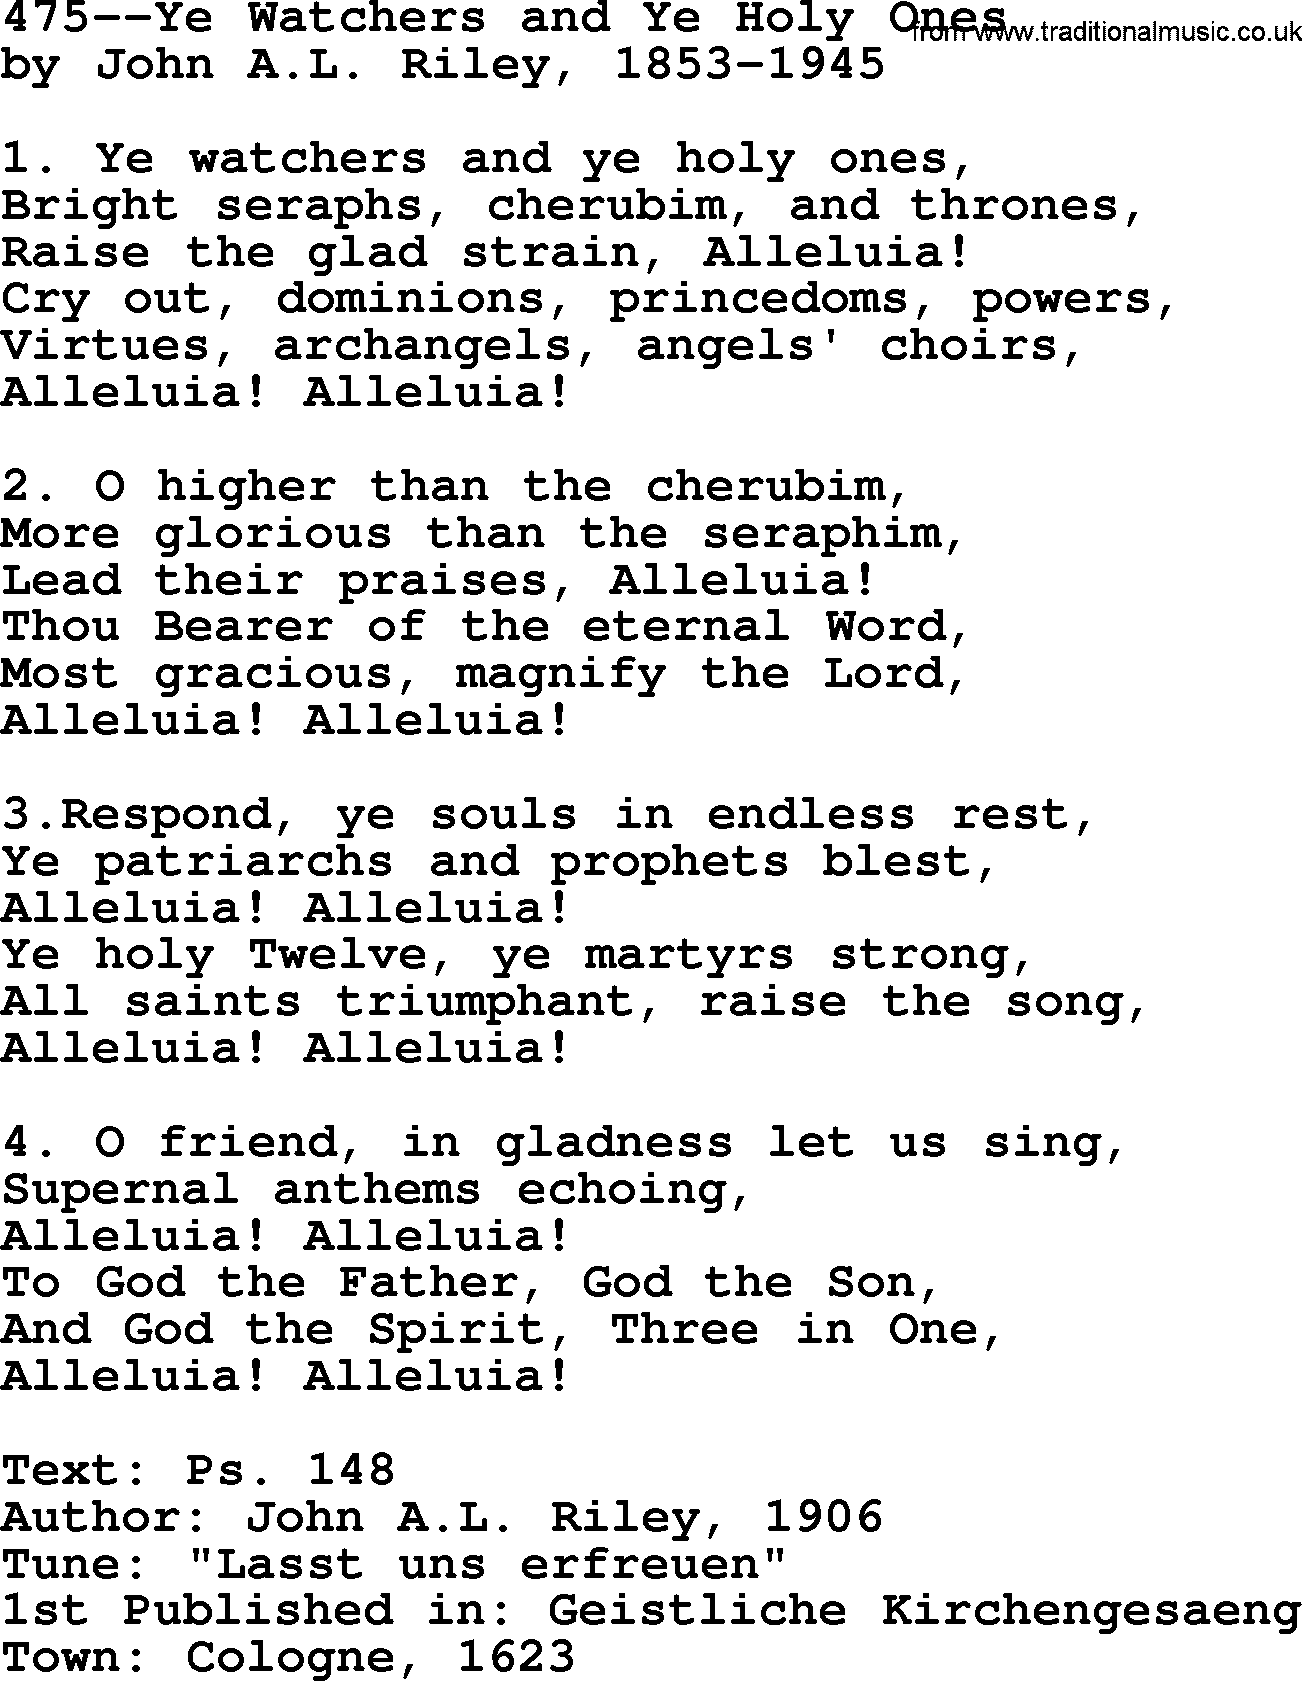 Lutheran Hymn: 475--Ye Watchers and Ye Holy Ones.txt lyrics with PDF